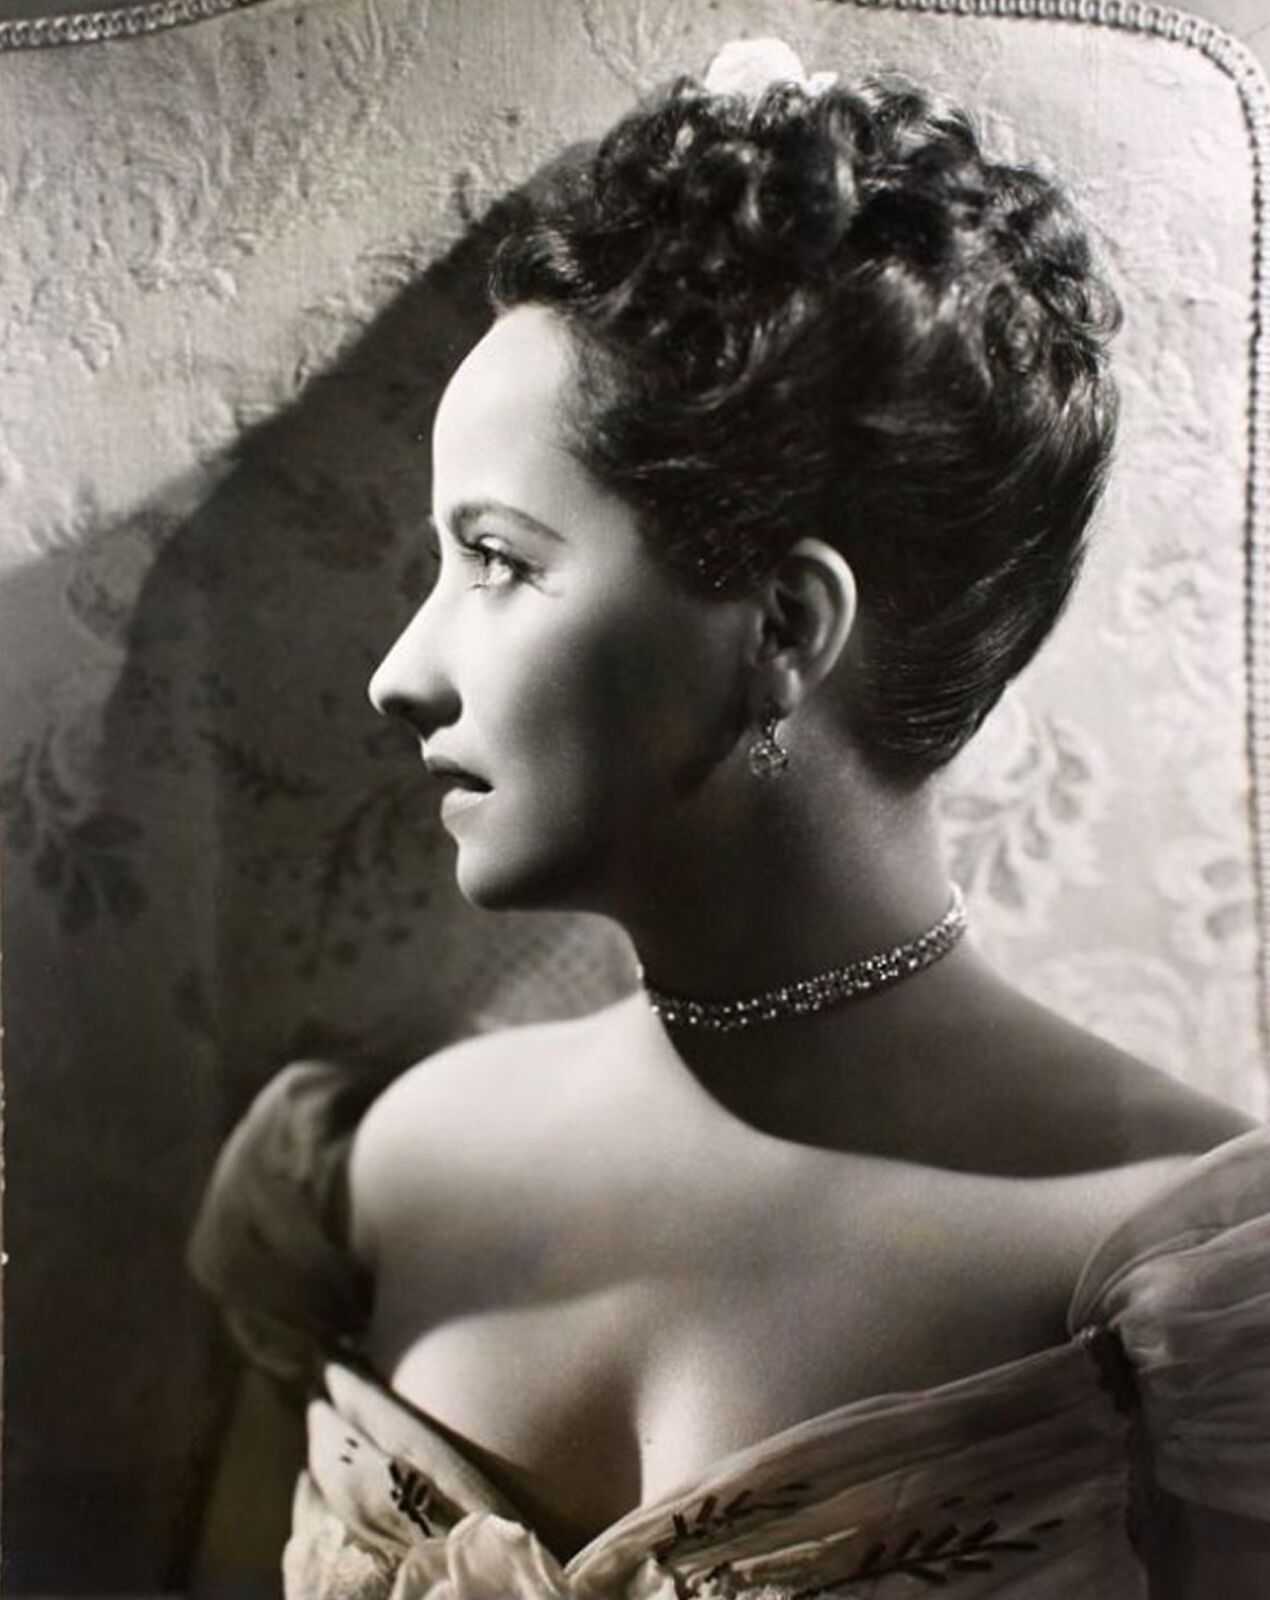 Cinema Favorite MERLE OBERON Side Profile Photo  (171-n)